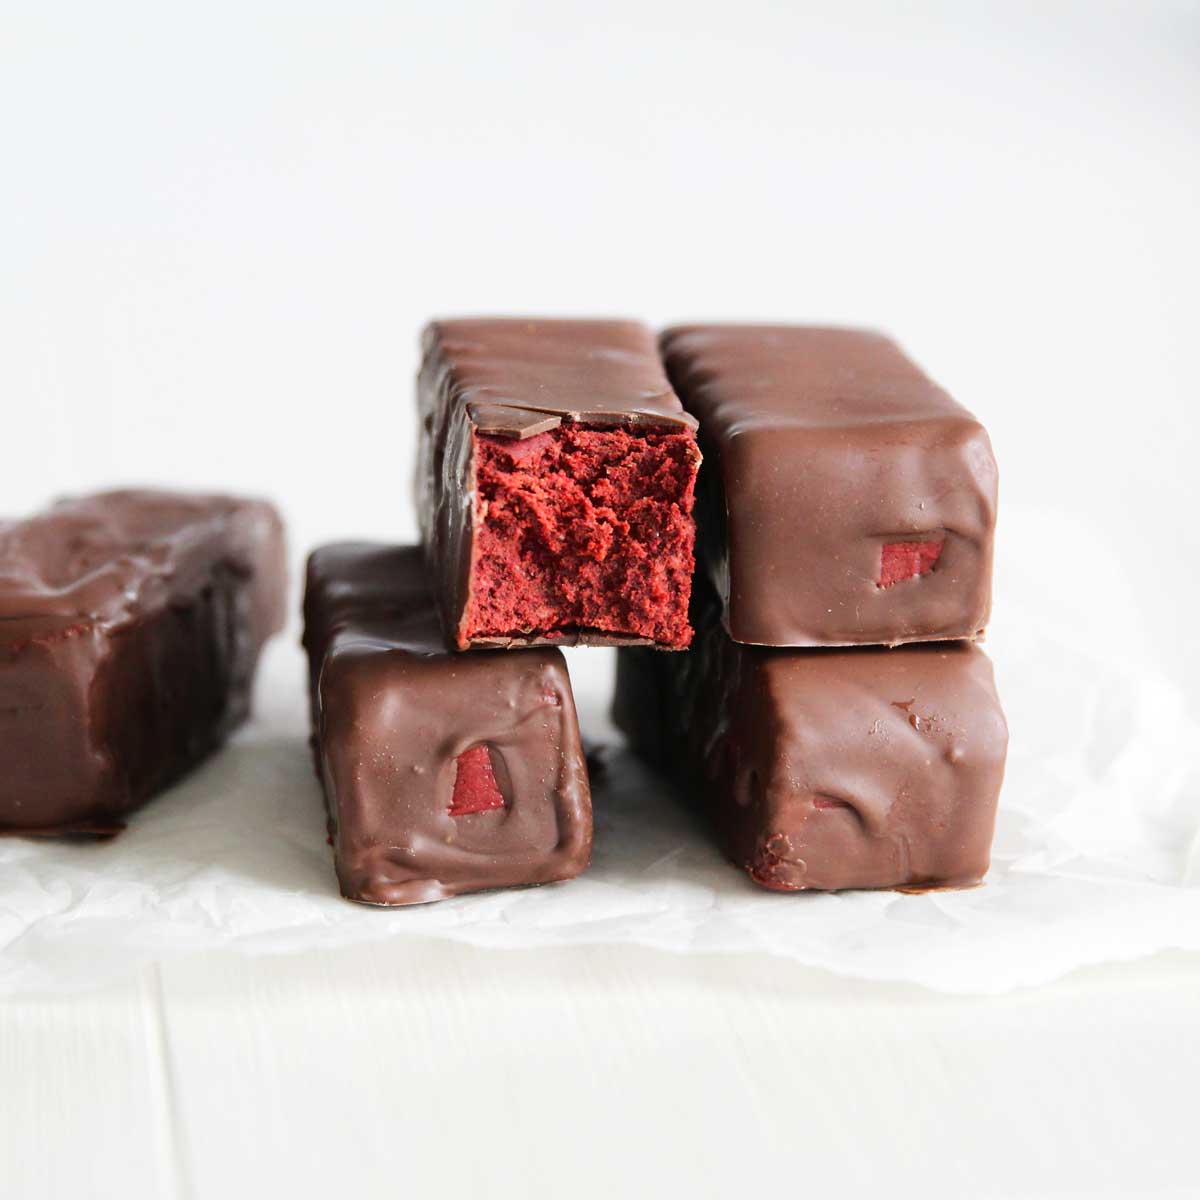 Gluten Free Red Velvet Cake Protein Bars (The Best Guilt-Free Dessert) - Chocolate Protein Balls